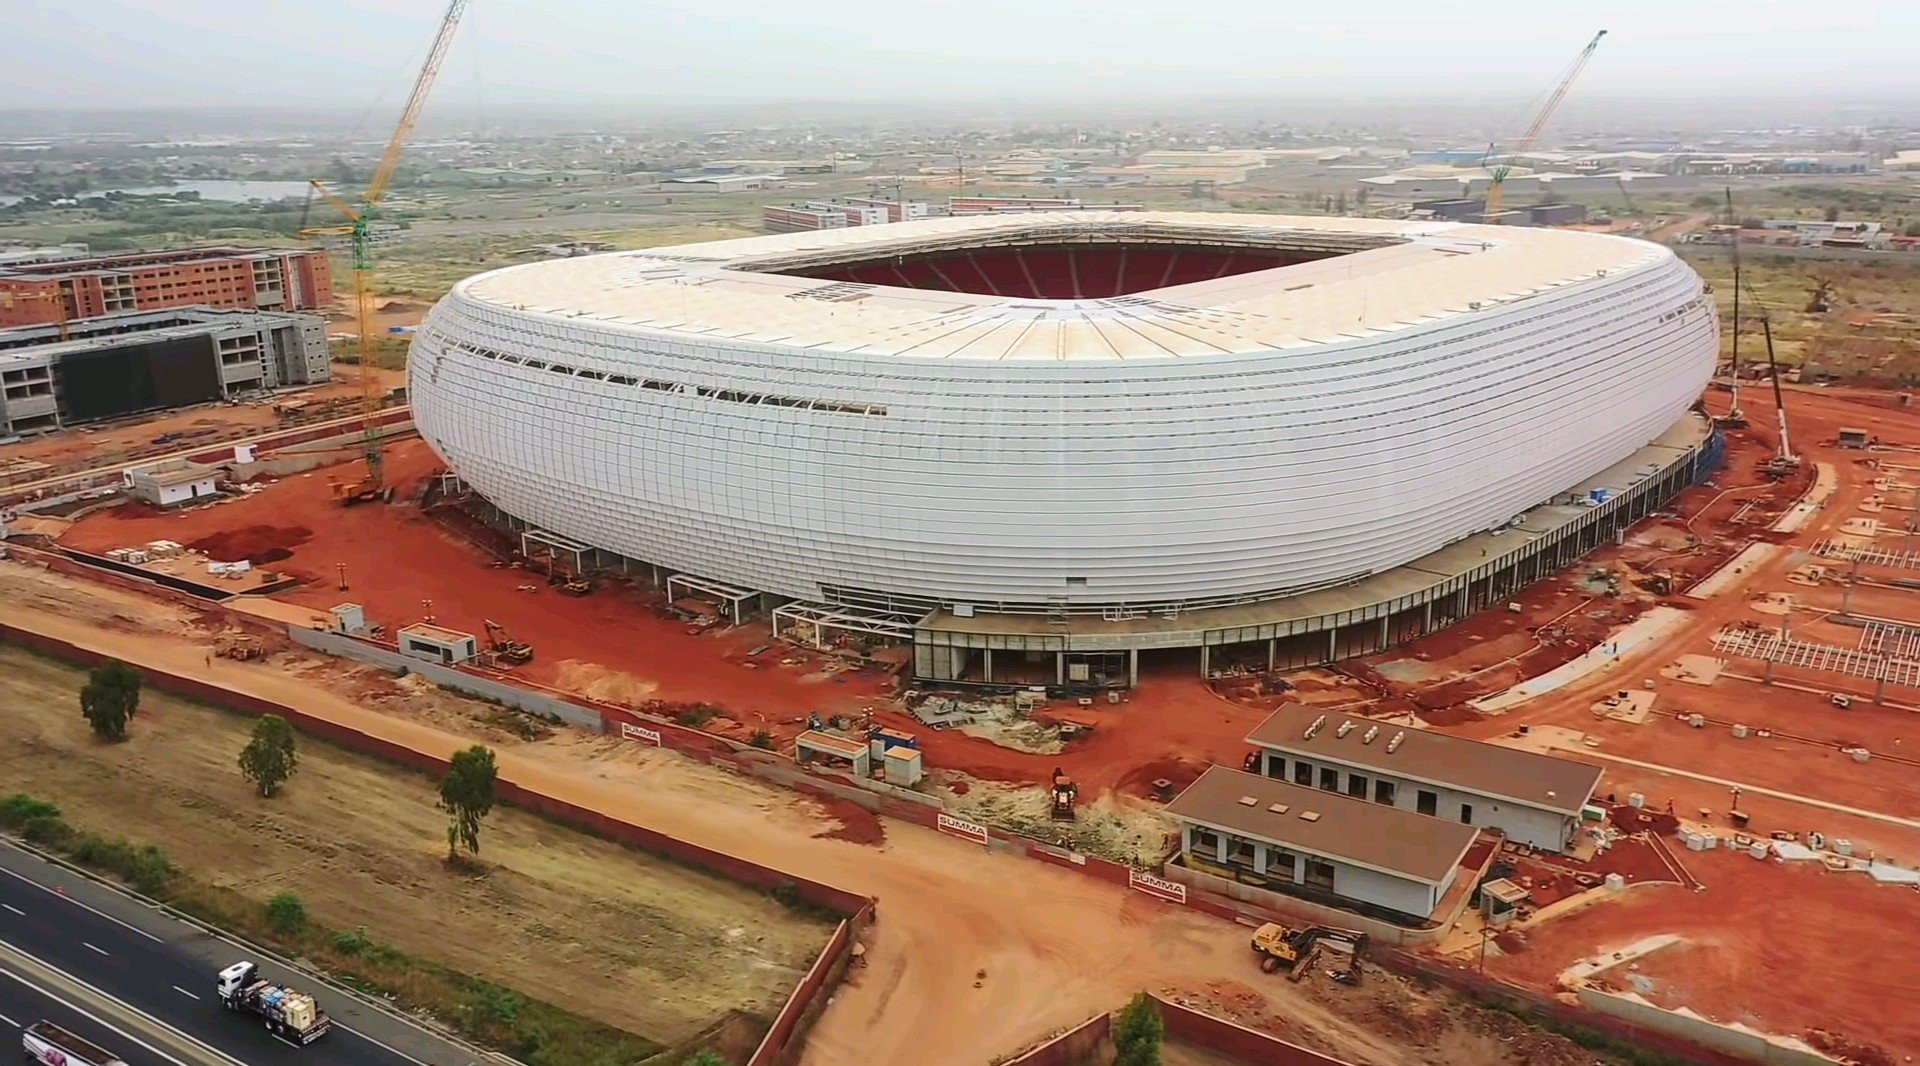 Dakar 2026 main venue the Diamniadio Olympic Stadium set for inauguration later this month